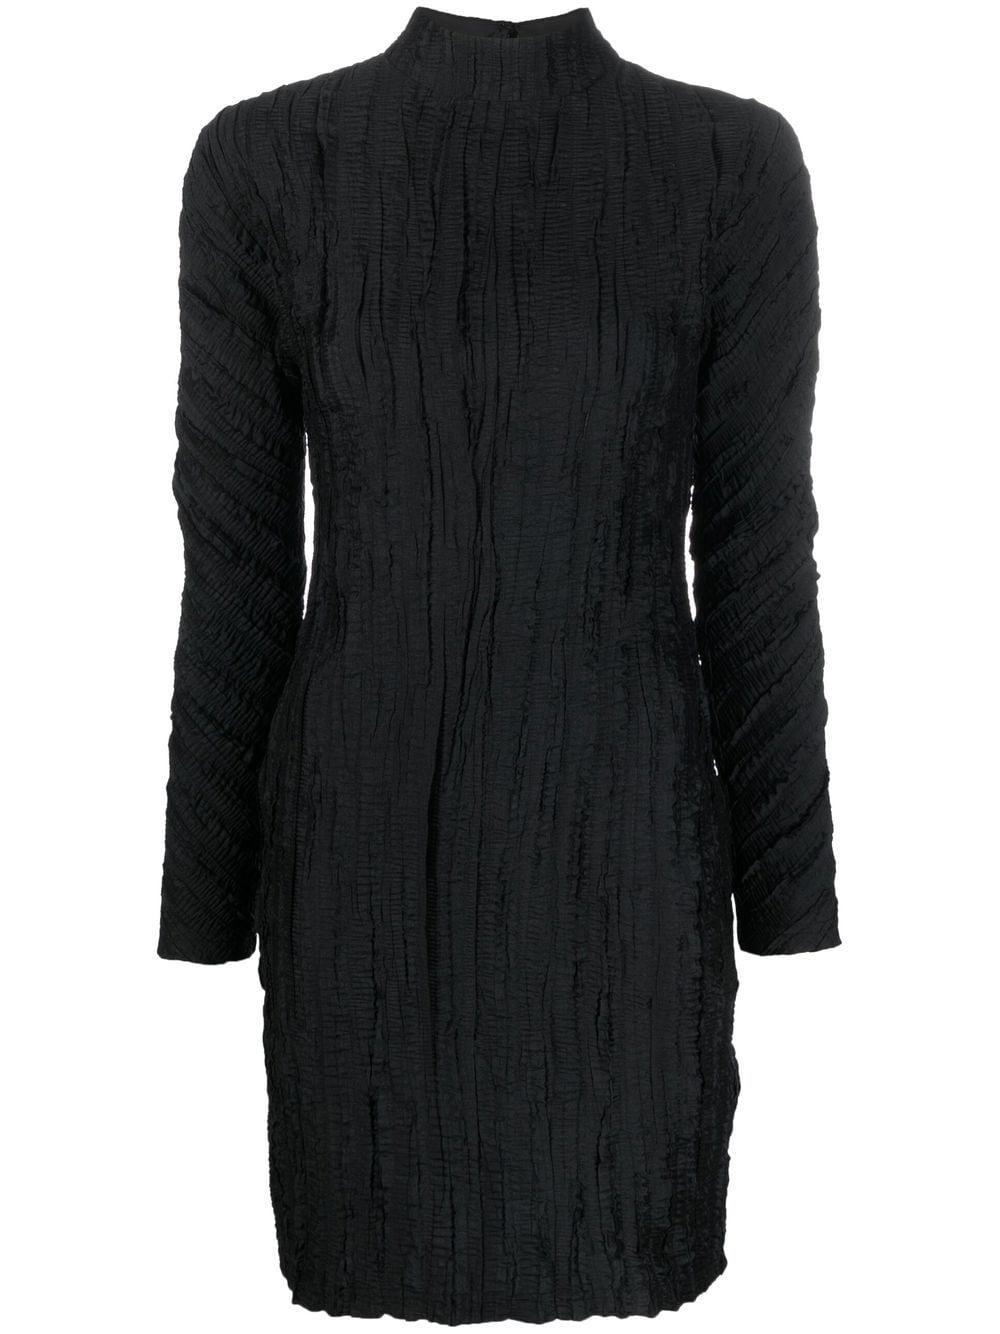 Rodebjer Crease-effect Mock Neck Dress in Black | Lyst